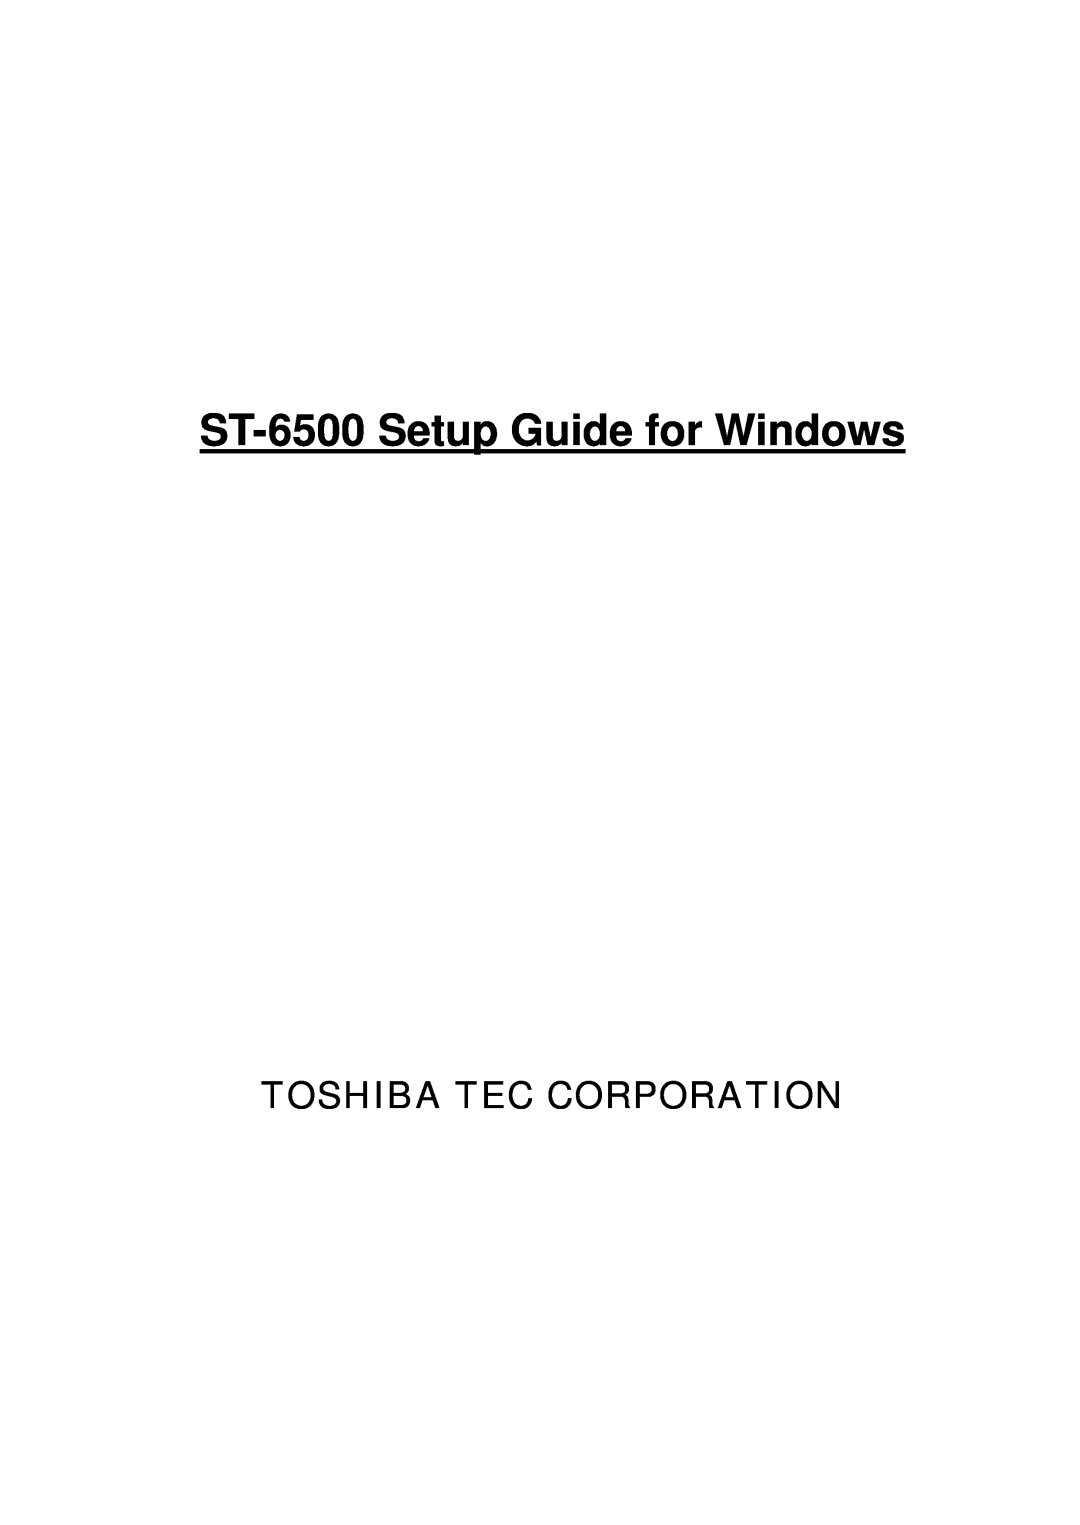 Toshiba E2711 setup guide ST-6500 Setup Guide for Windows, Toshiba Tec Corporation 